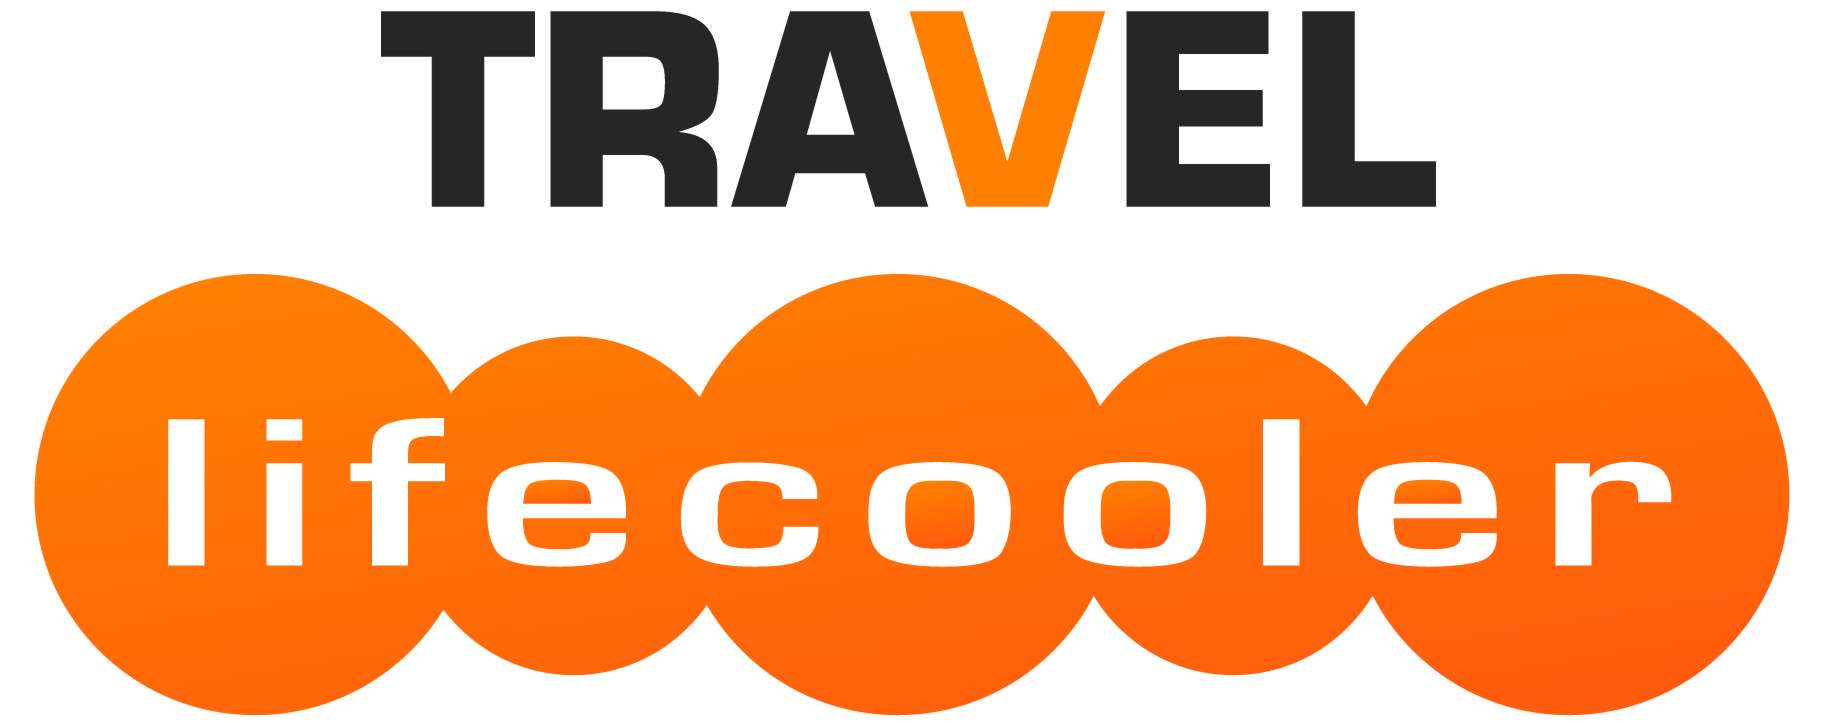 Travel lifecooler logo